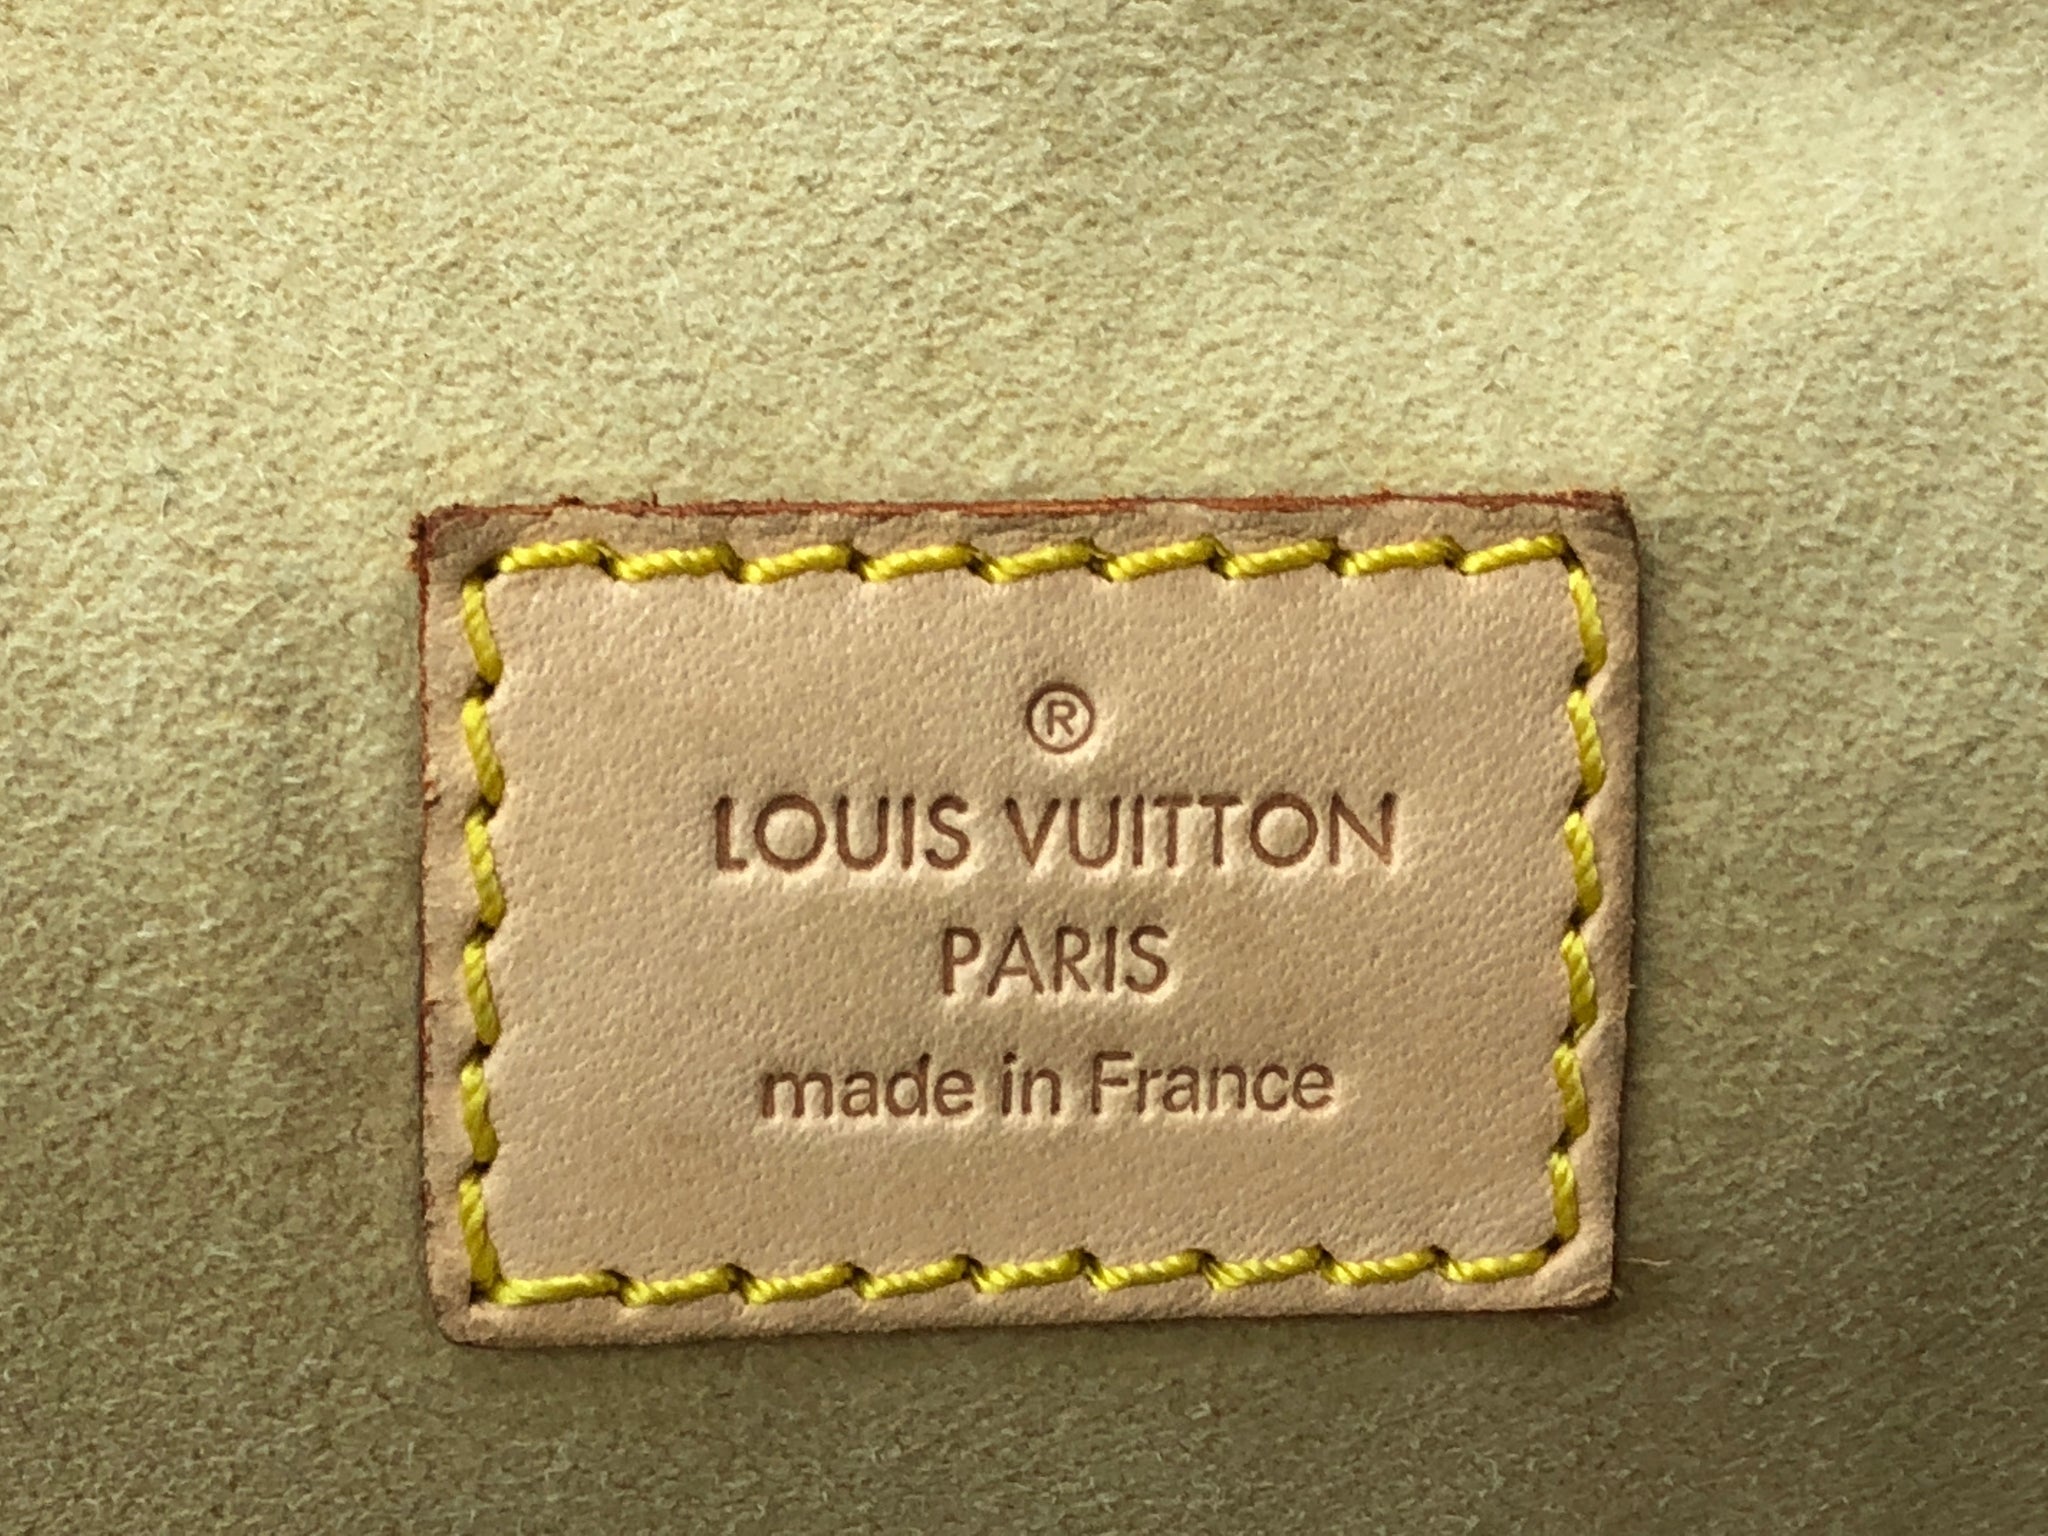 Celebs Bundle Up With Picks From Louis Vuitton, Prada and Celine - PurseBlog